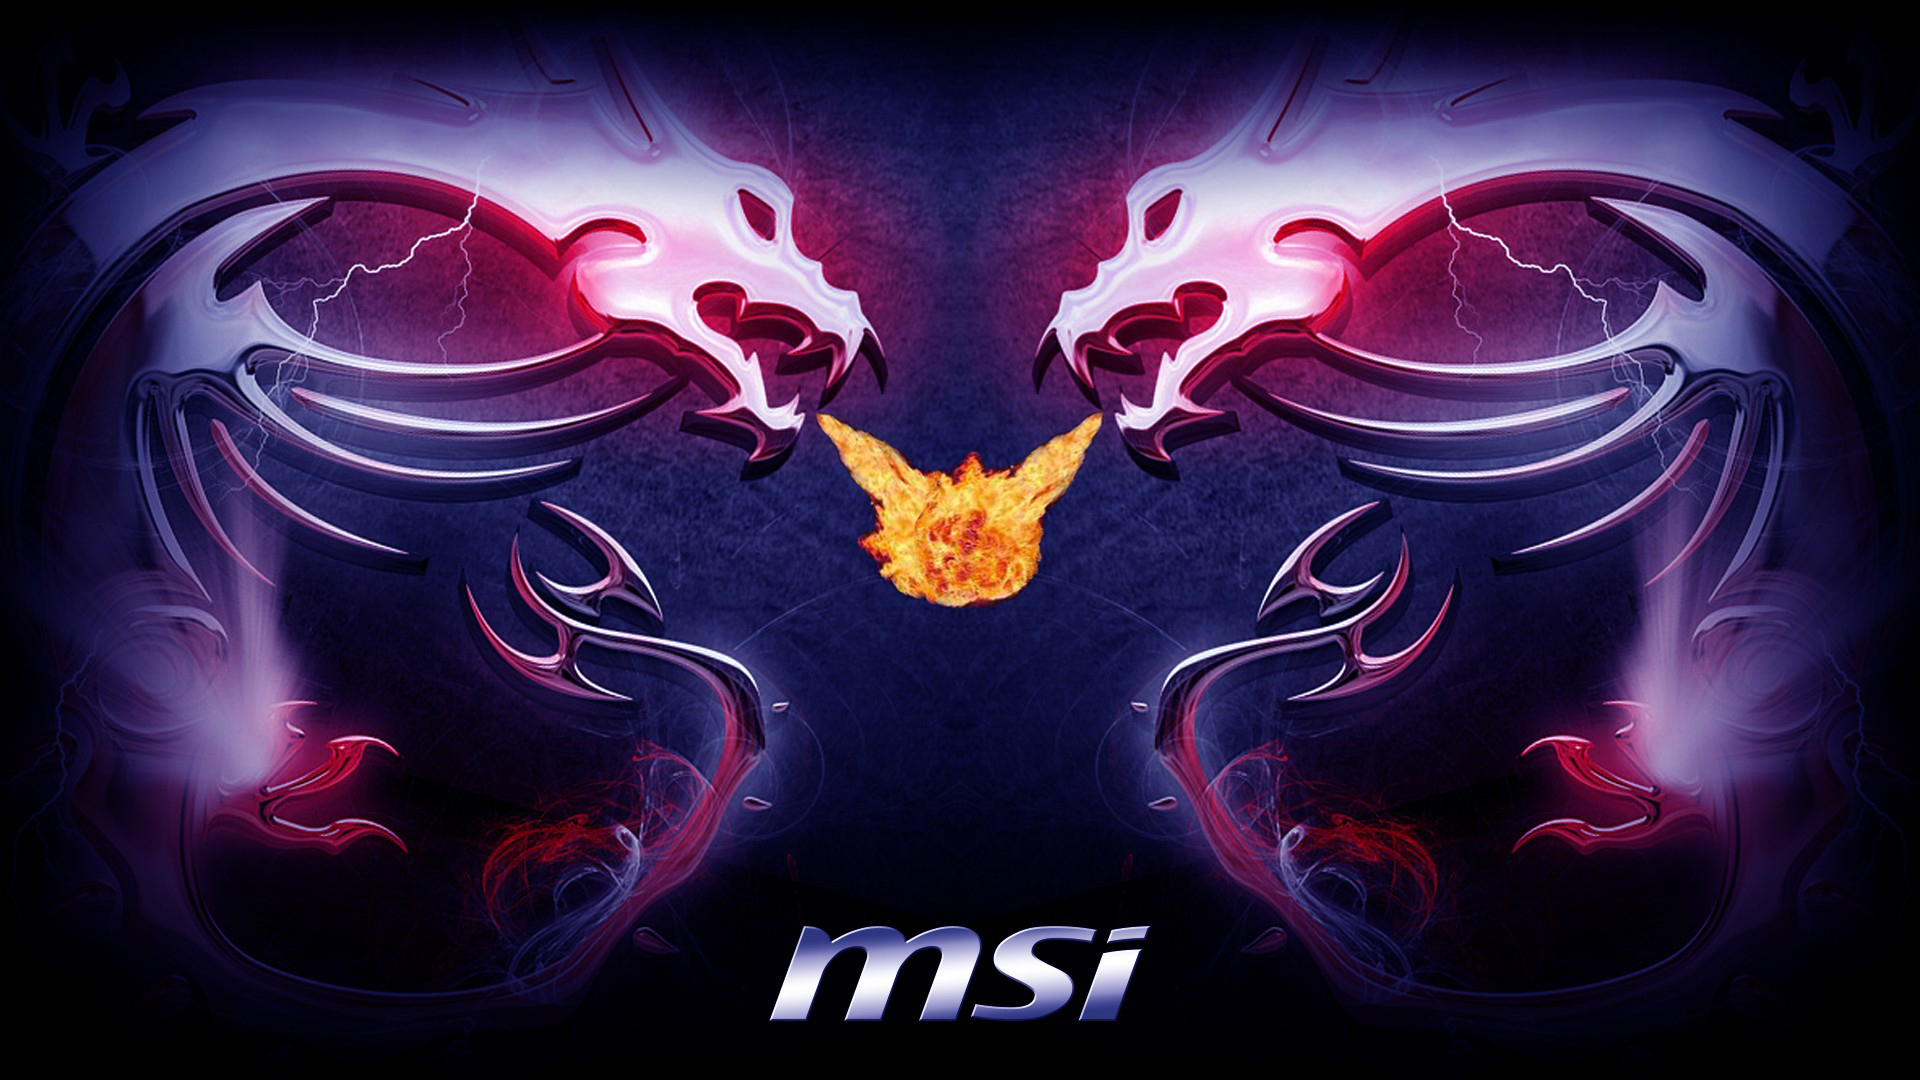 msi twin dragon logo fire flame breath hd 1920x1080 1080p wallpaper 1920x1080